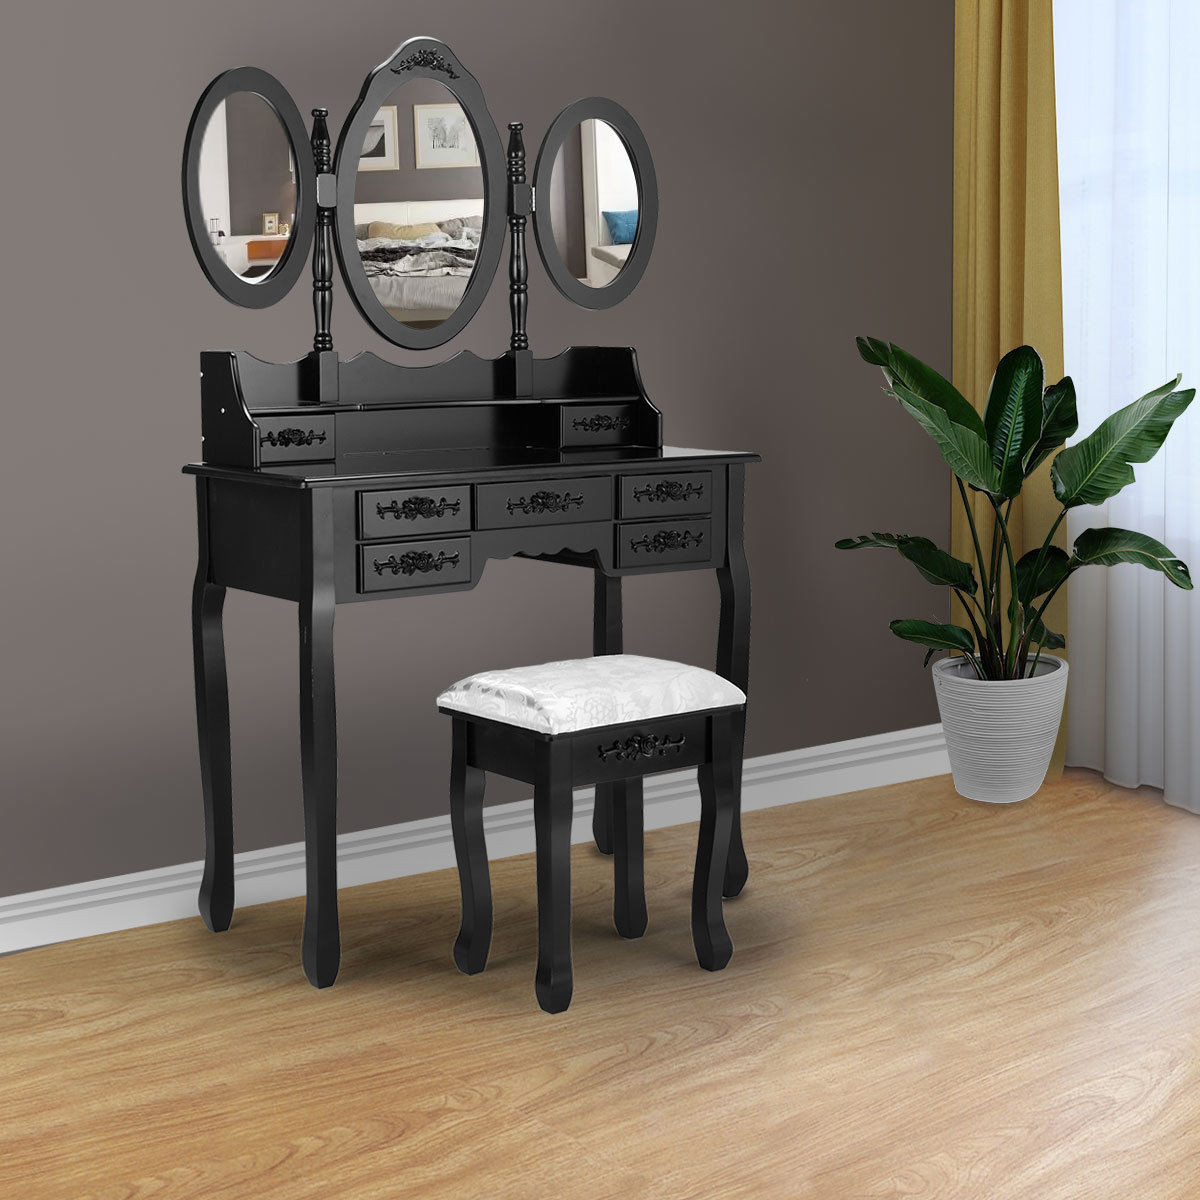 Bedroom Vanity With Storage
 Topcobe Makeup Vanity Set with Drawers Vanity Table with